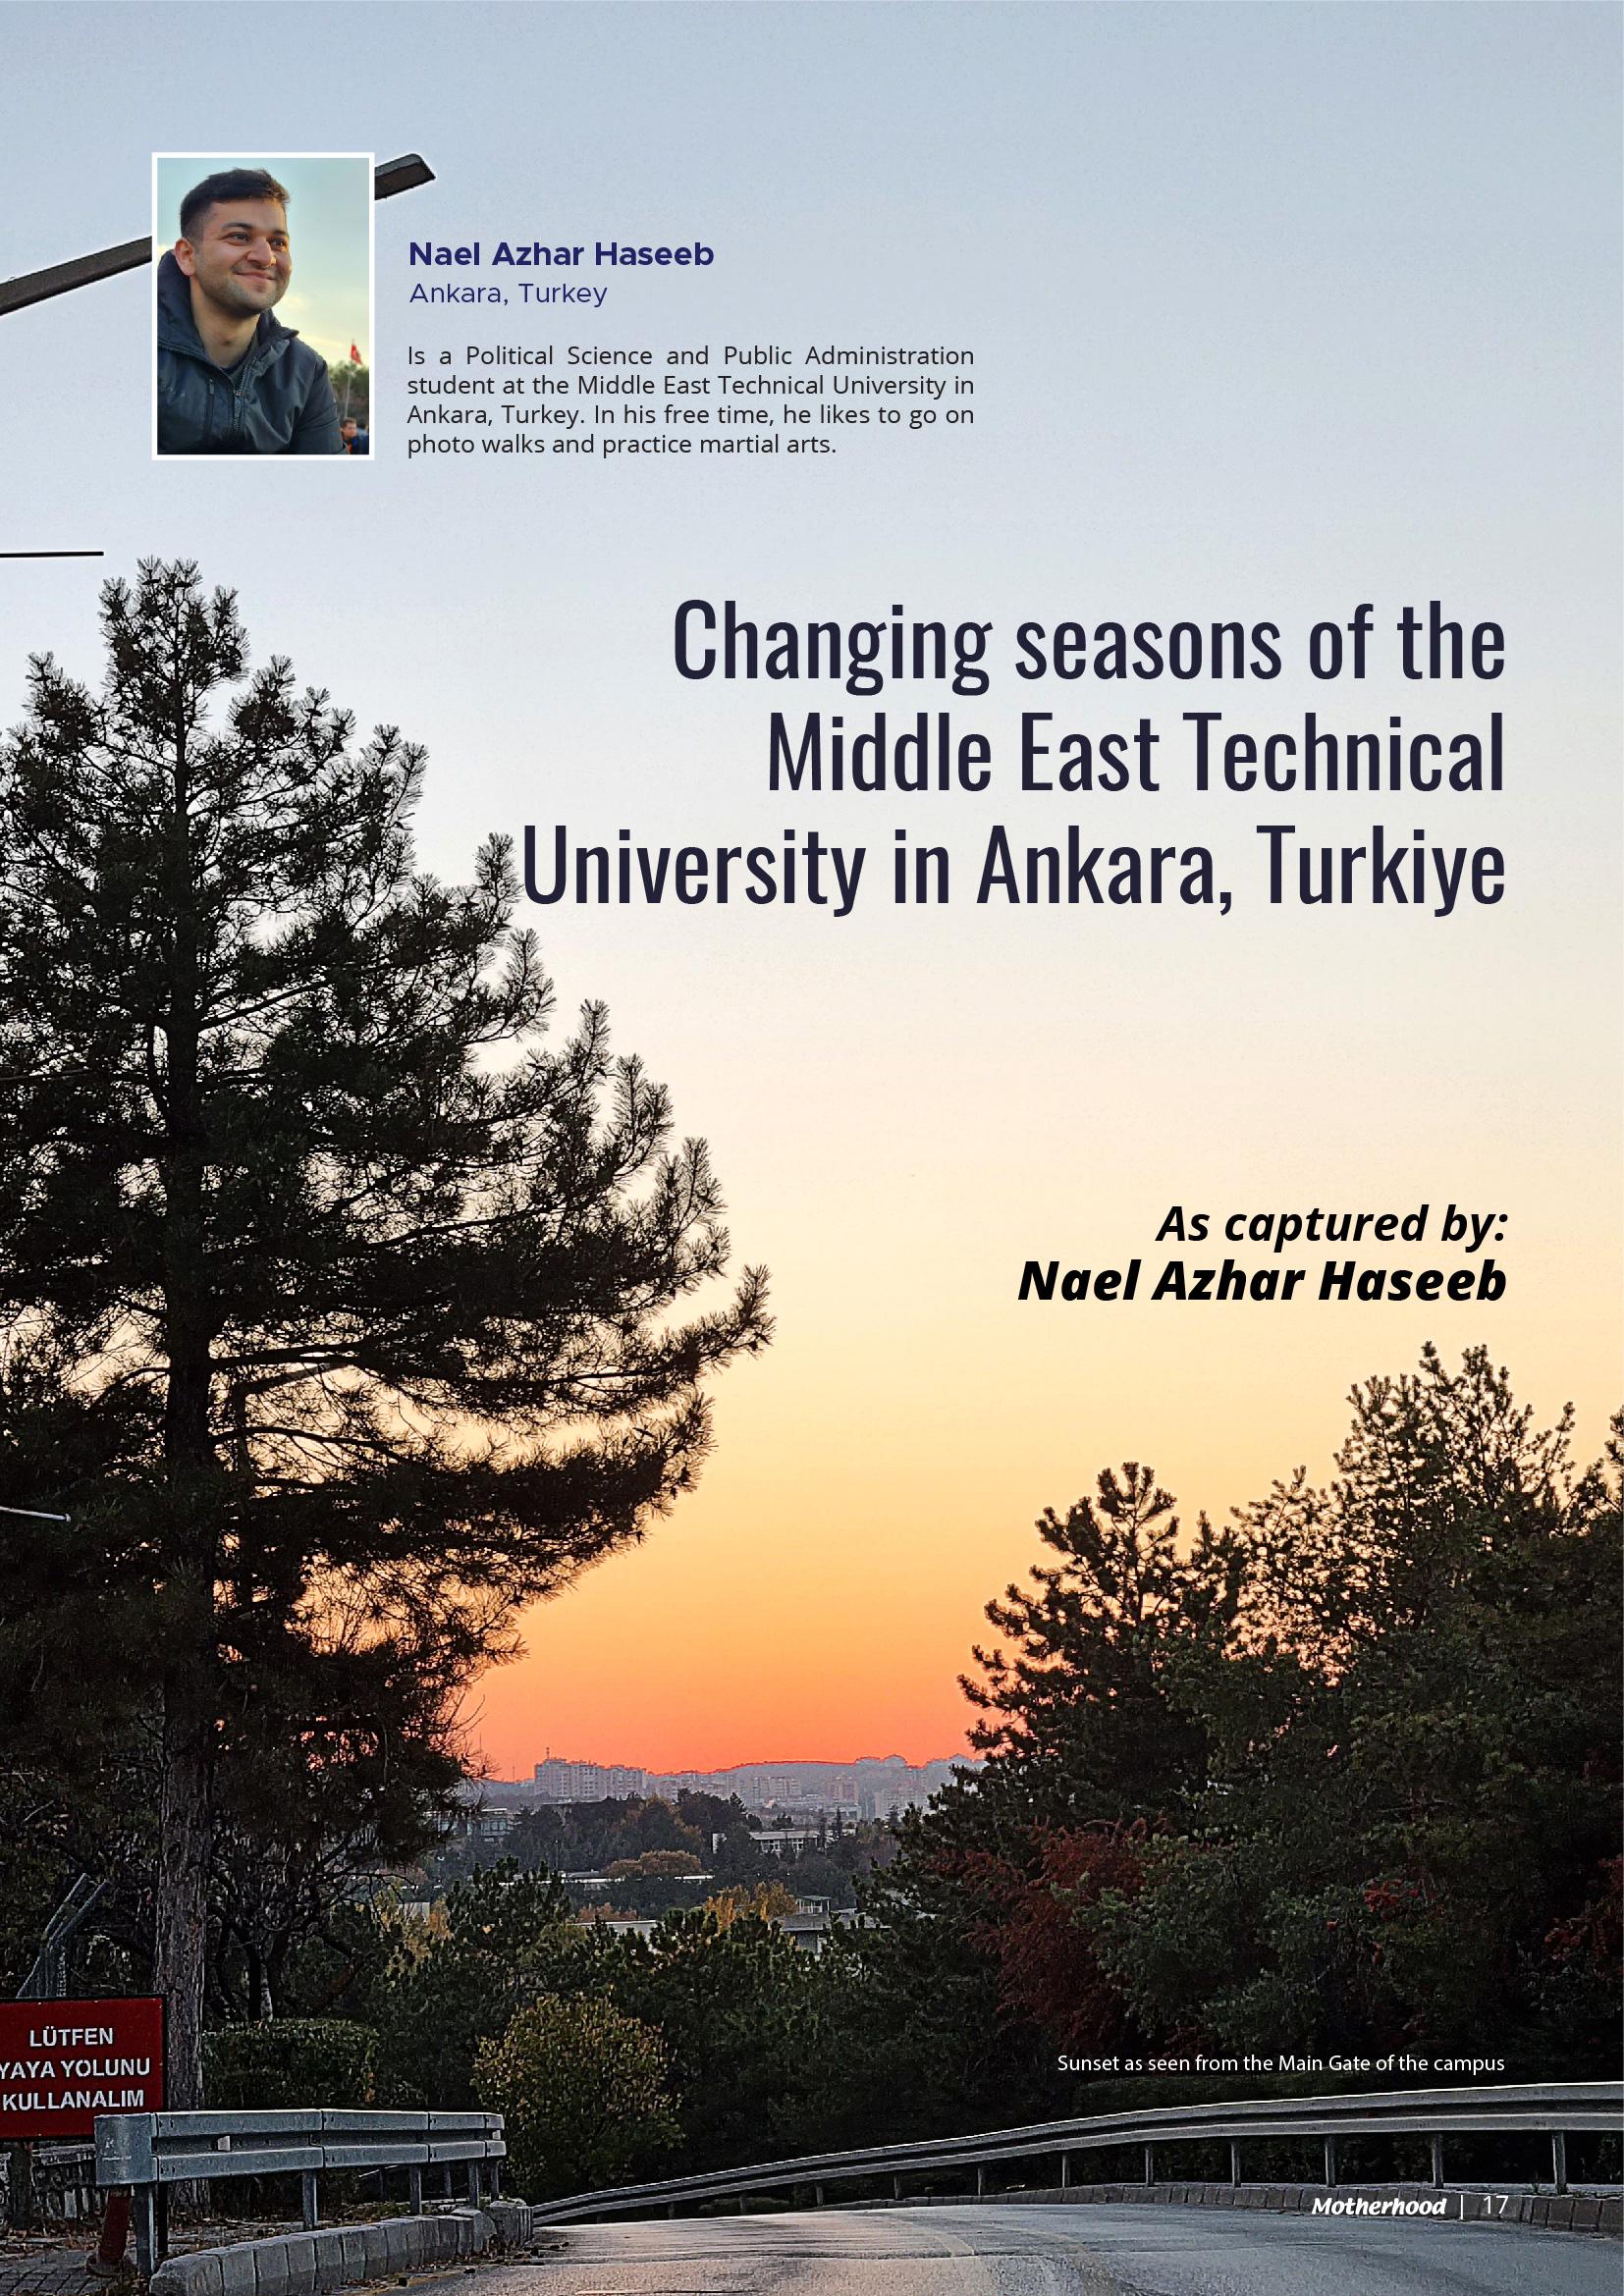 Nael Azhar Haseeb @ Middle East Technical University, Ankara